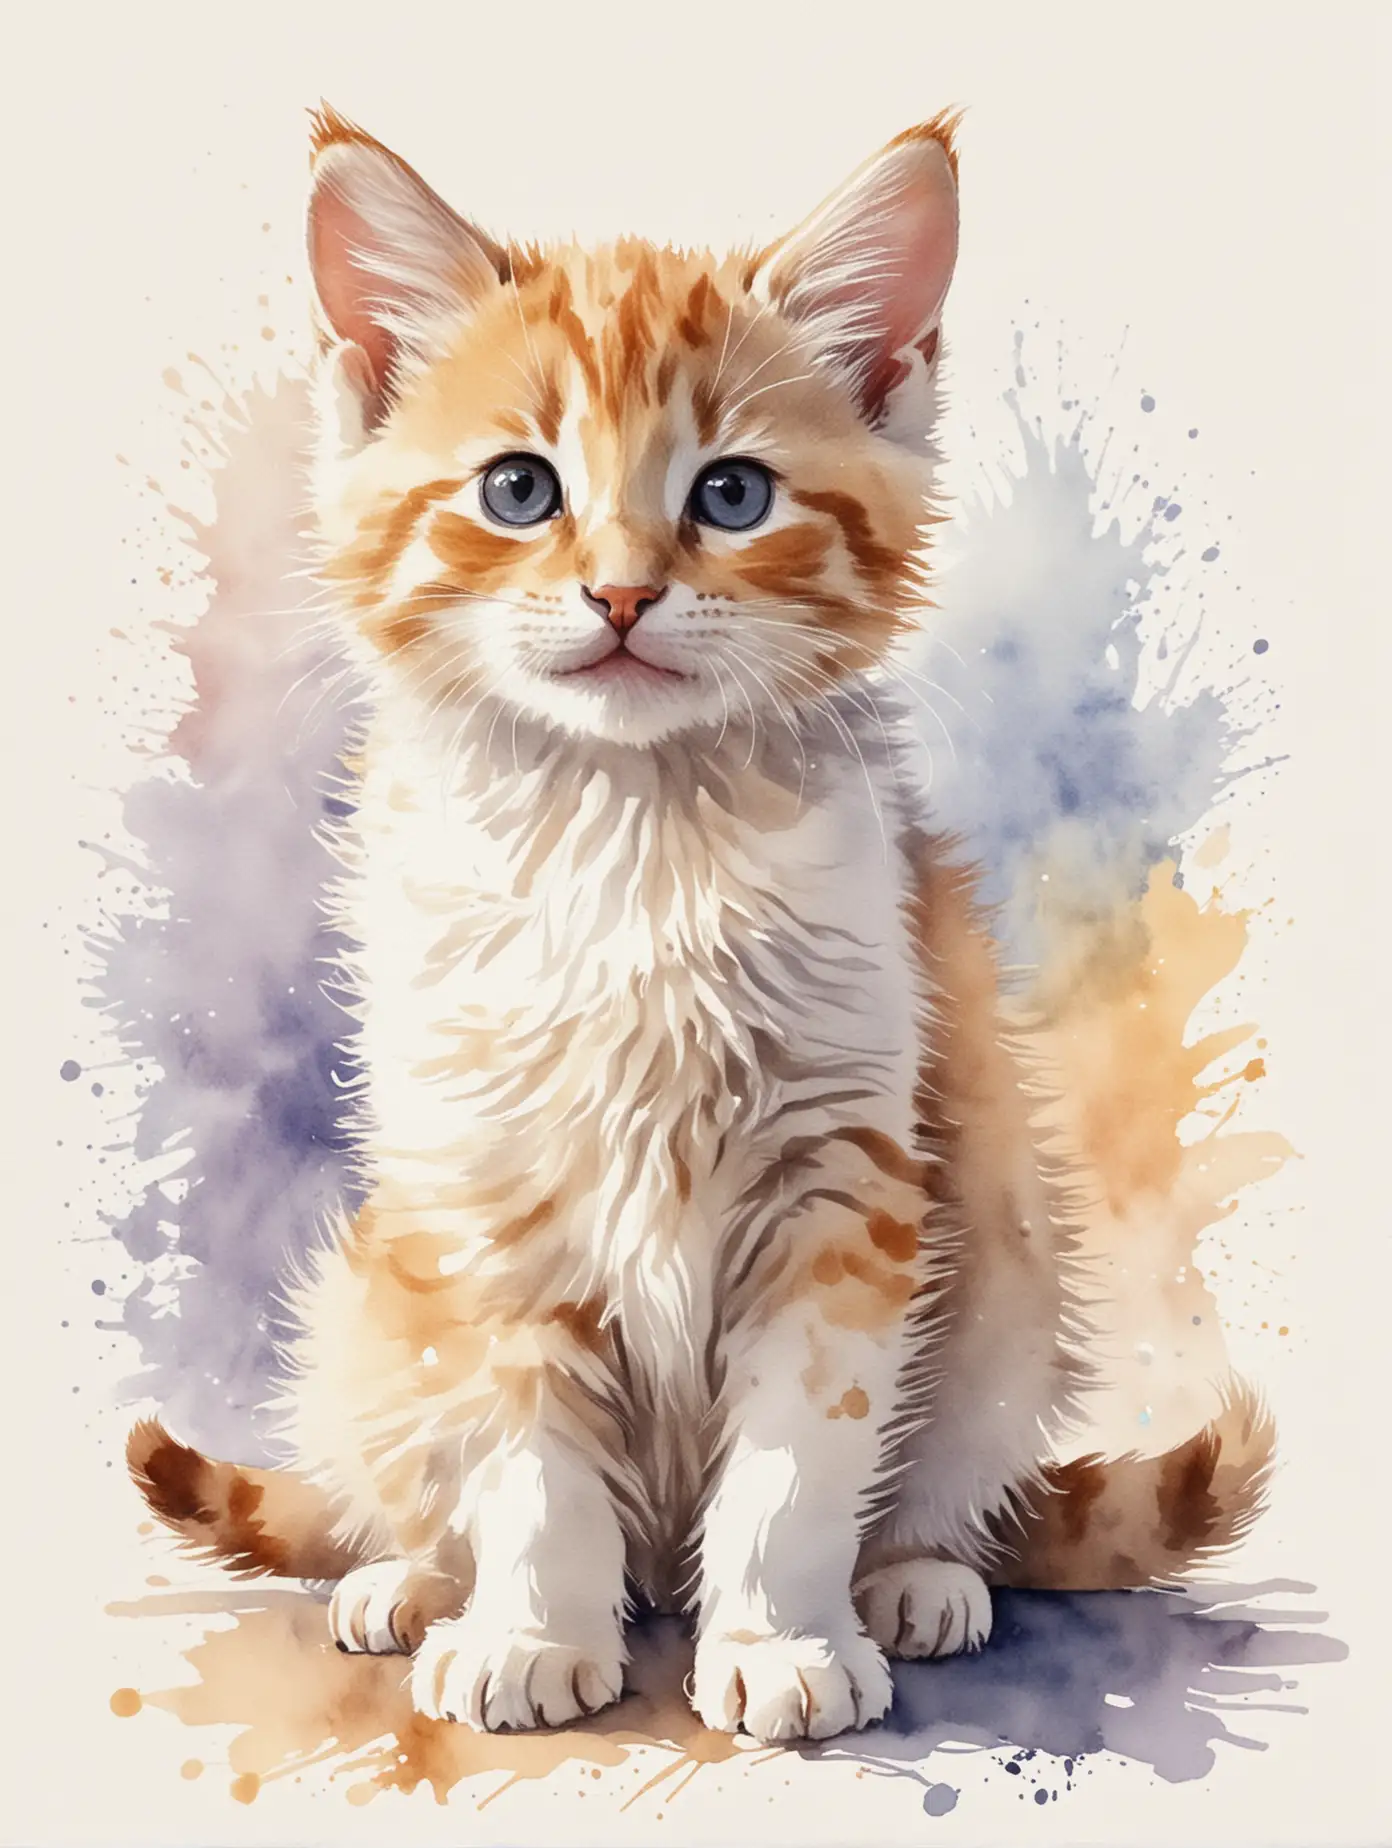 Adorable Happy Kitten Sitting in Watercolor Style